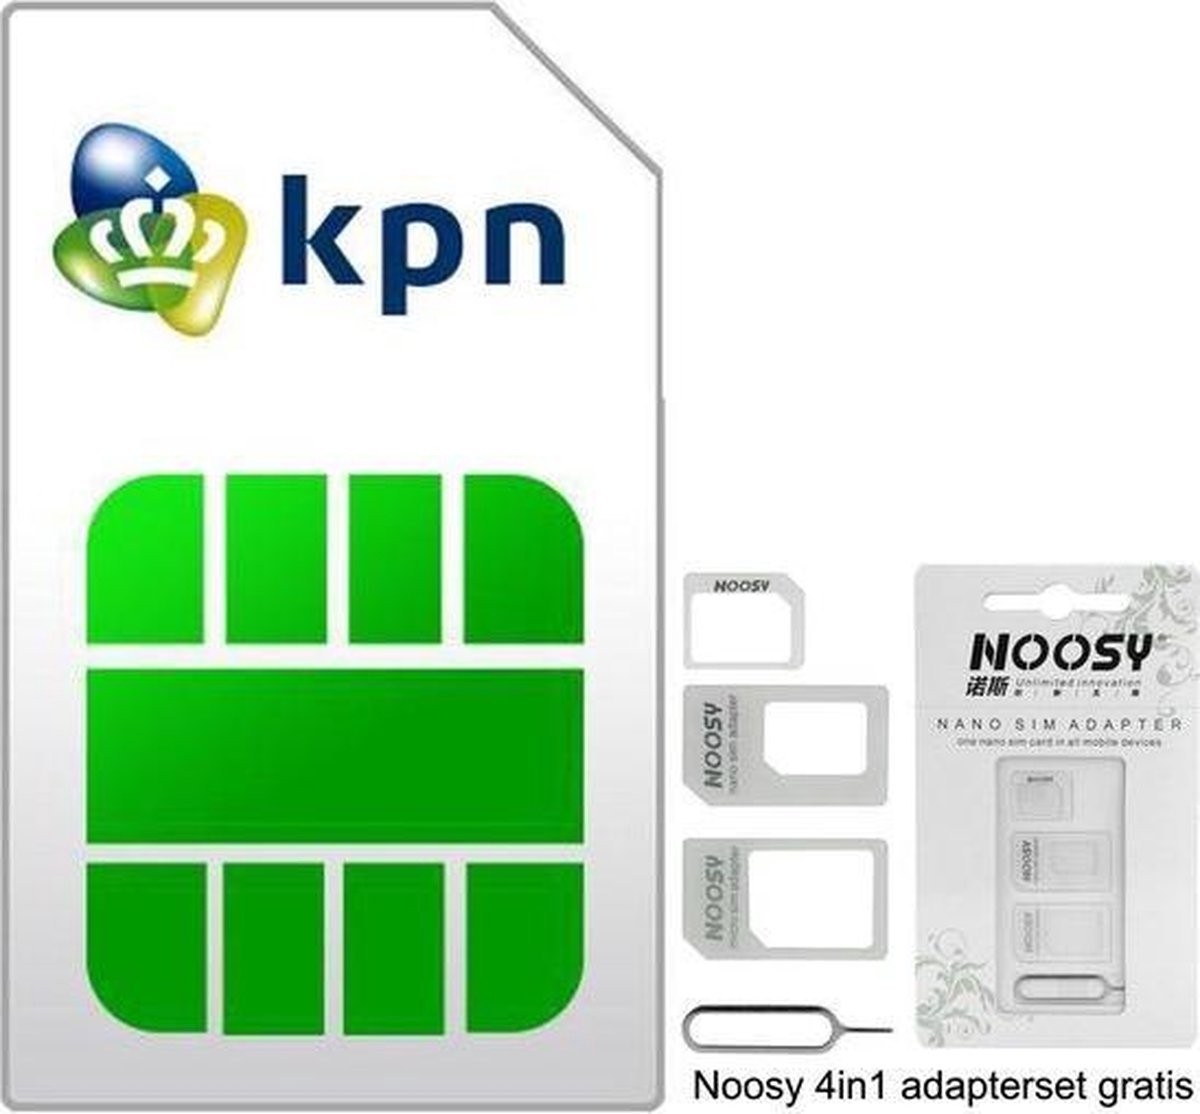 06 2227-2500 | KPN Prepaid simkaart | Mooi en makkelijk 06 nummer | bol.com